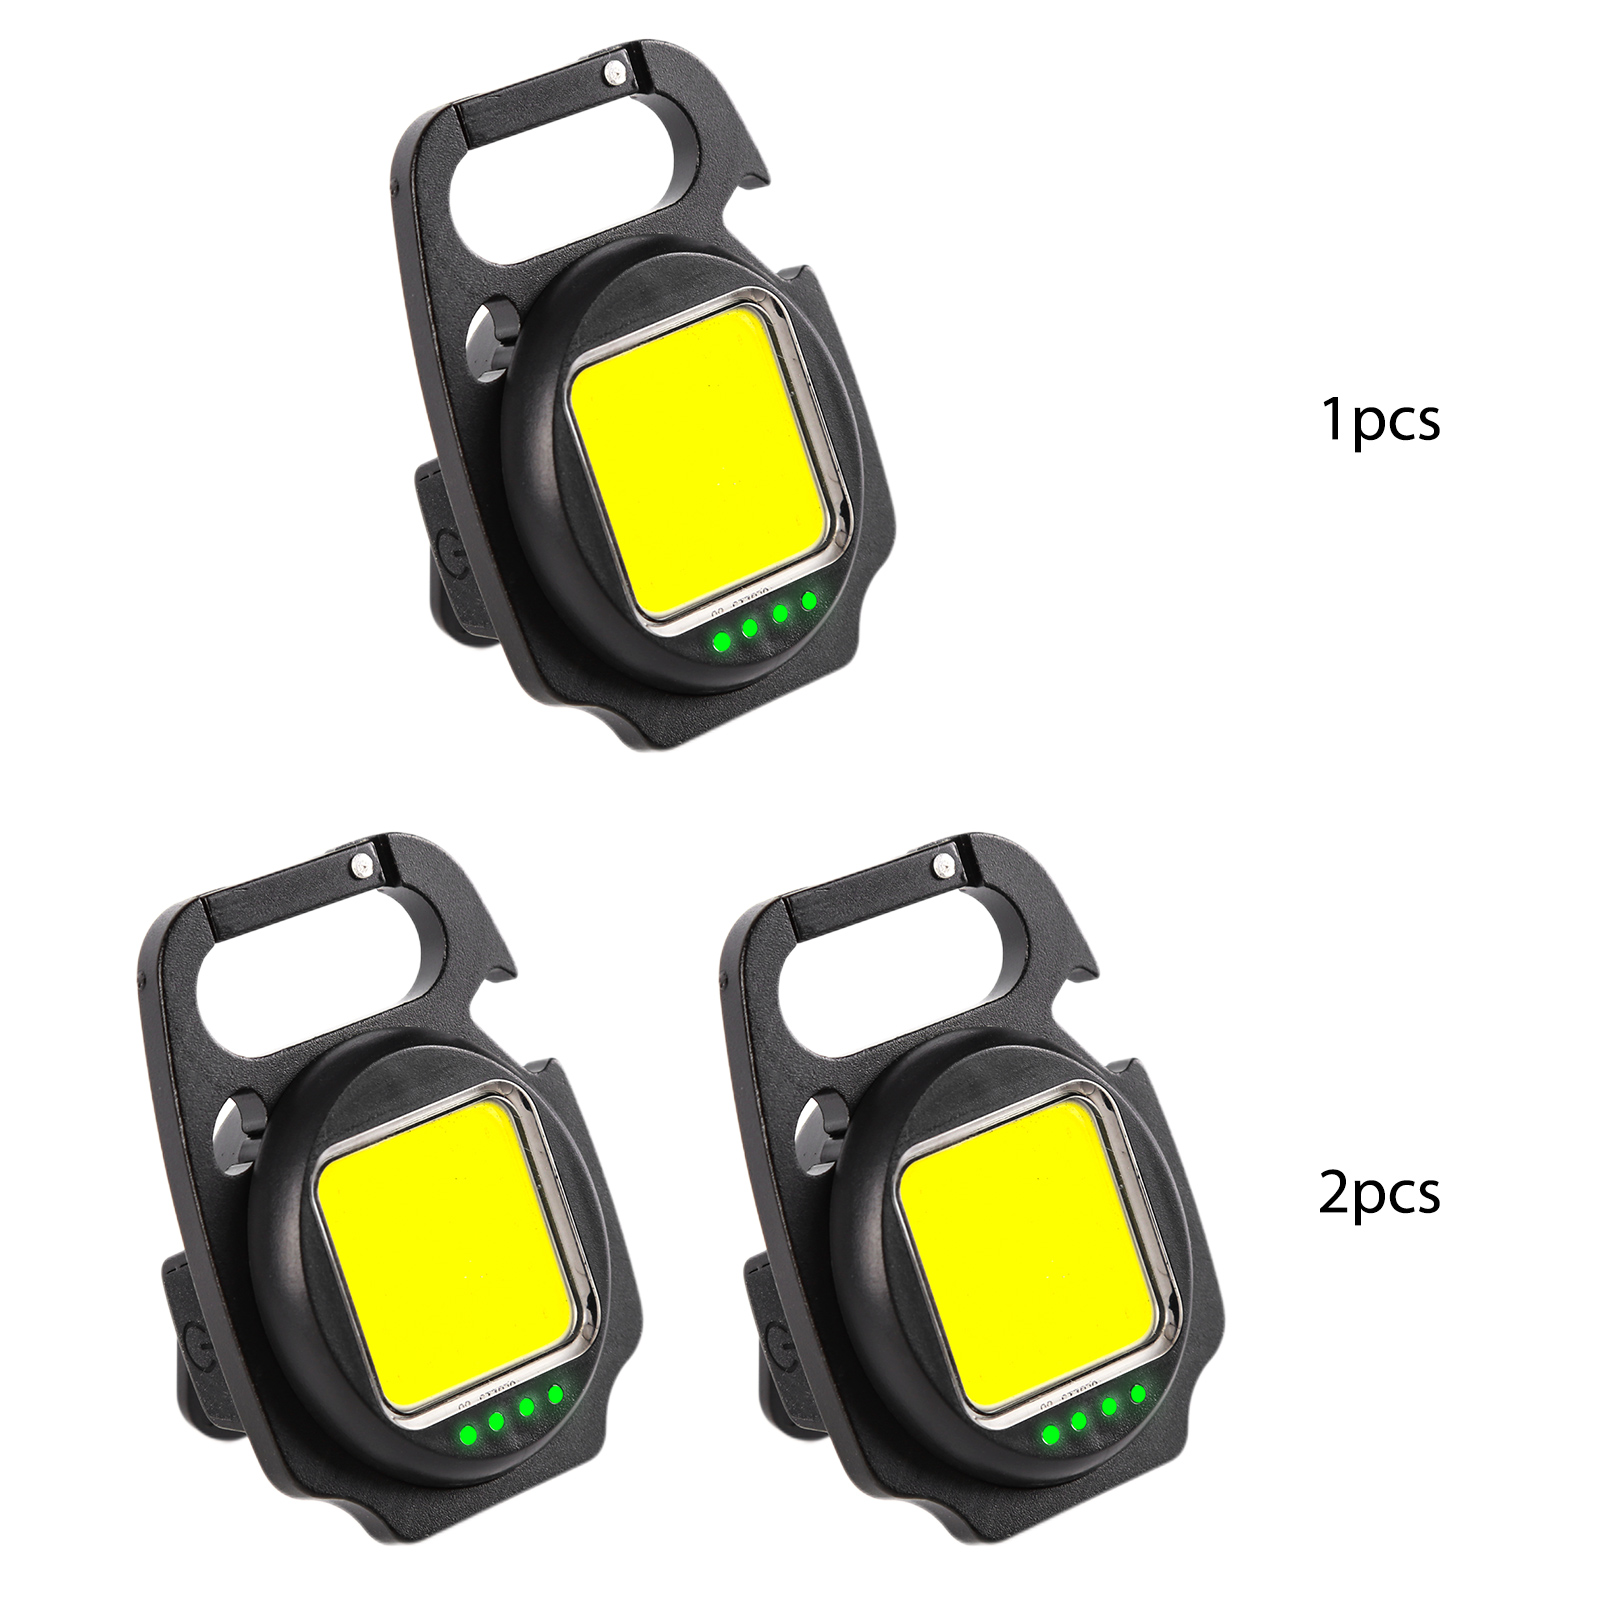 Keychain Flashlights - COB LED 500 Lumens Pocket Brightest Small Lights